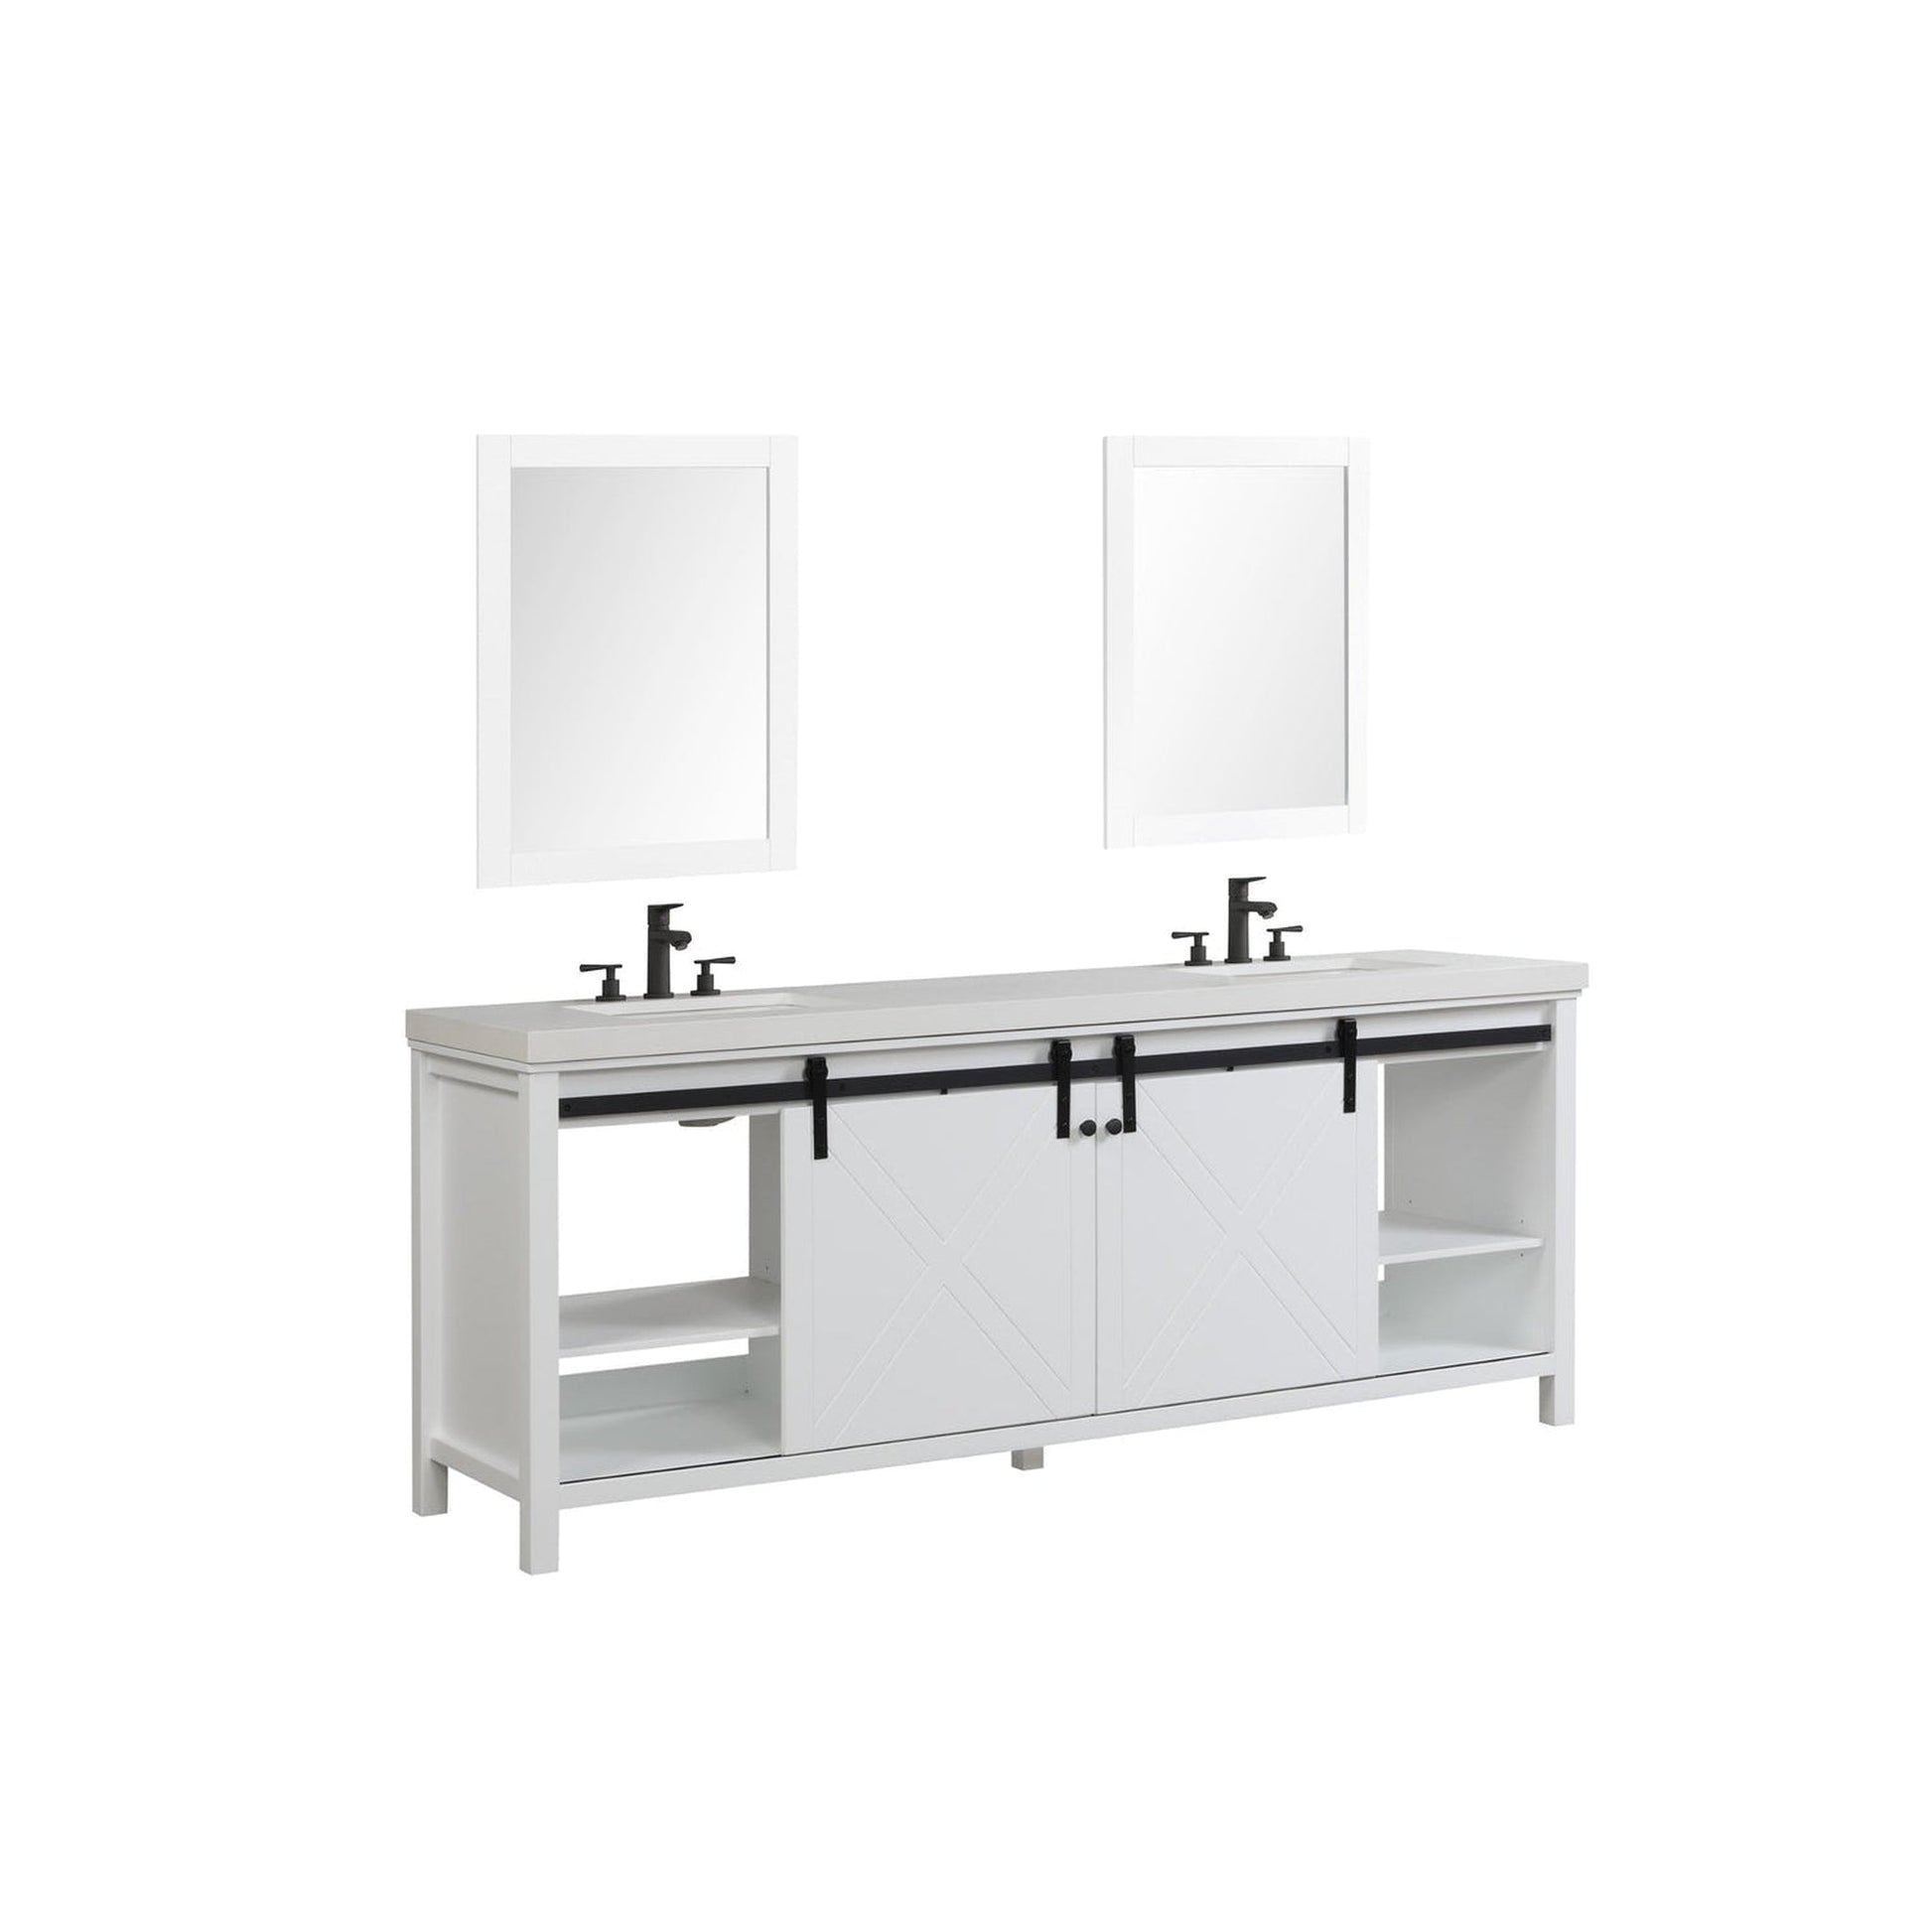 Eviva Dallas 84” x 34” White Freestanding Bathroom Vanity With White Granite Countertop and Double Undermount Sink